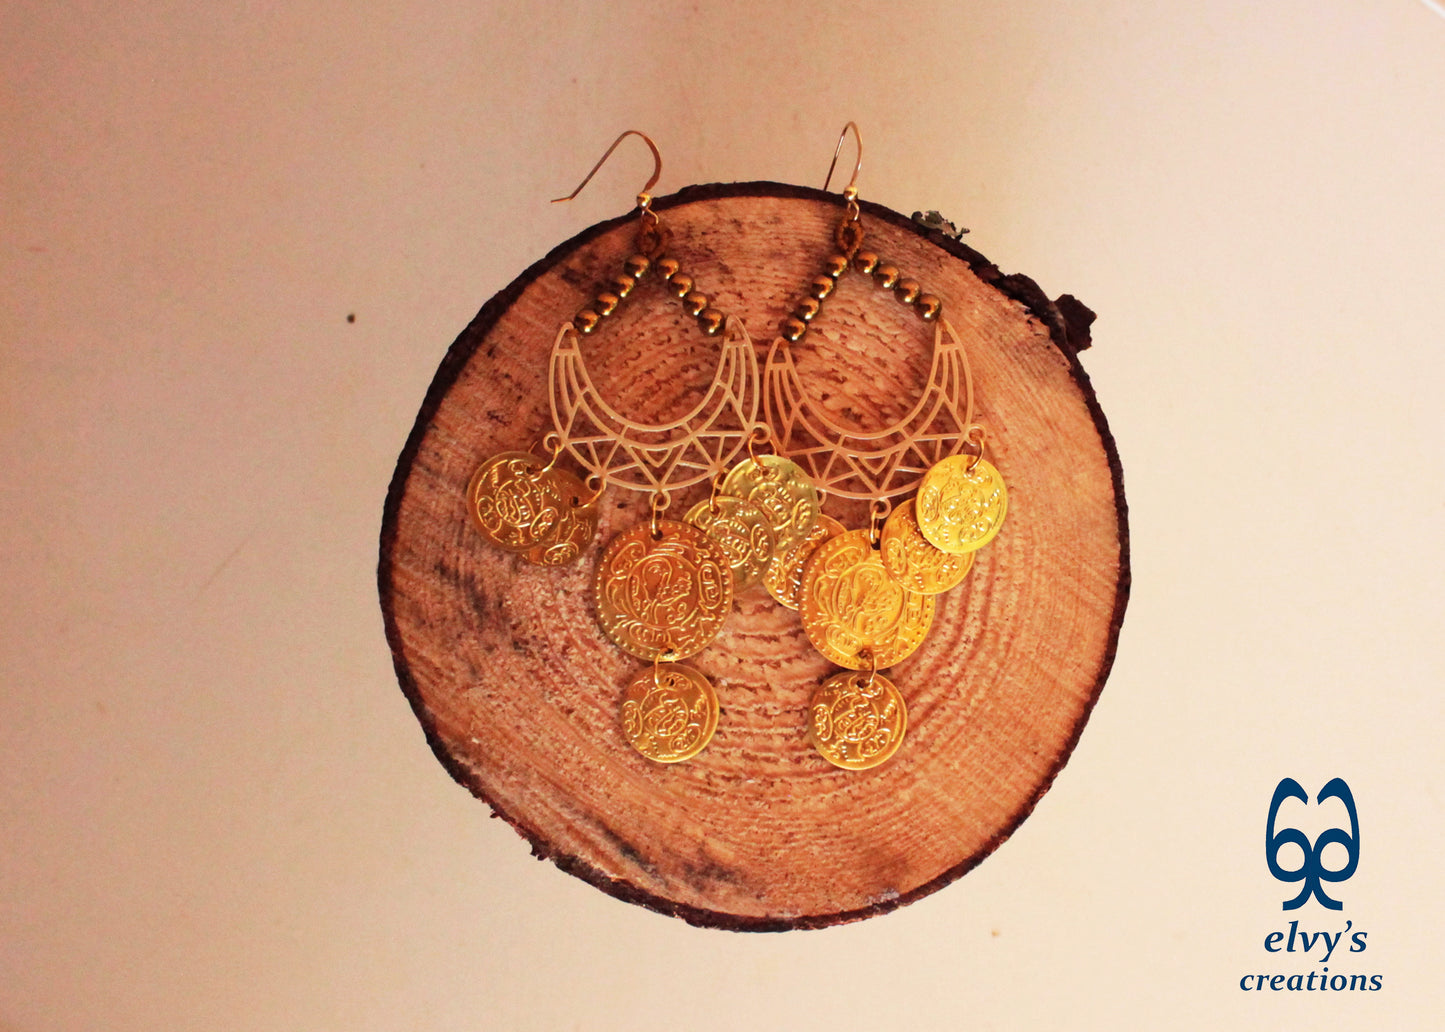 Gold Macrame Earrings with Hematite Gemstones Gypsy Earrings with Coins Boho Dangle with Coins, Μακραμέ Σκουλαρίκια με Χρυσά Φλουριά και Κρυστάλλους Αιματίτη